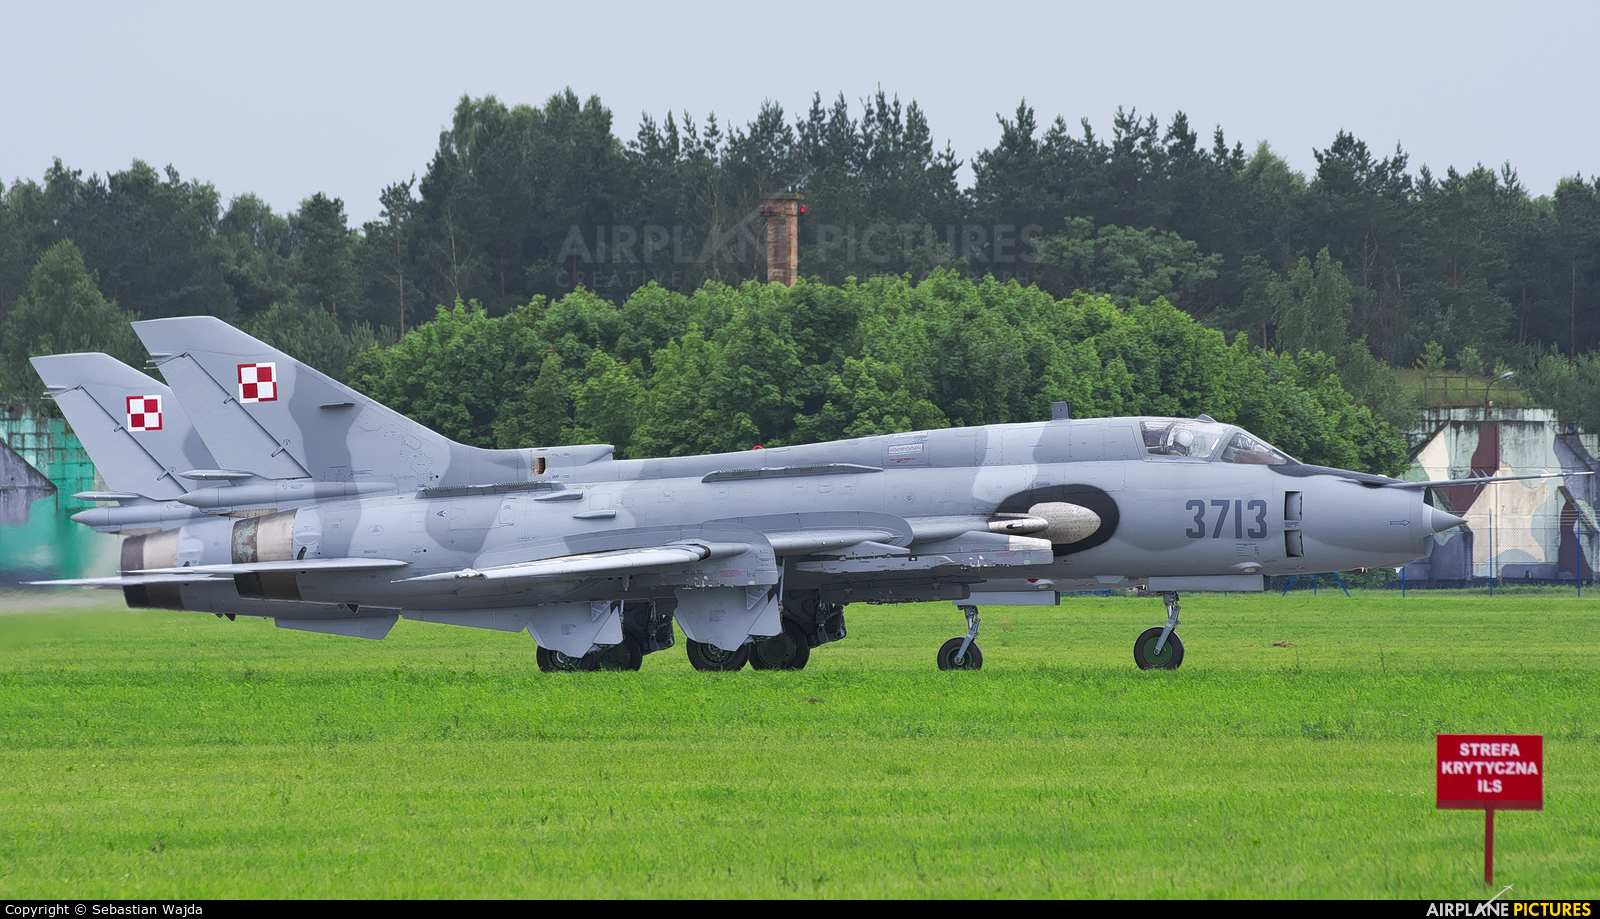 Poland - Air Force 3713 aircraft at Świdwin